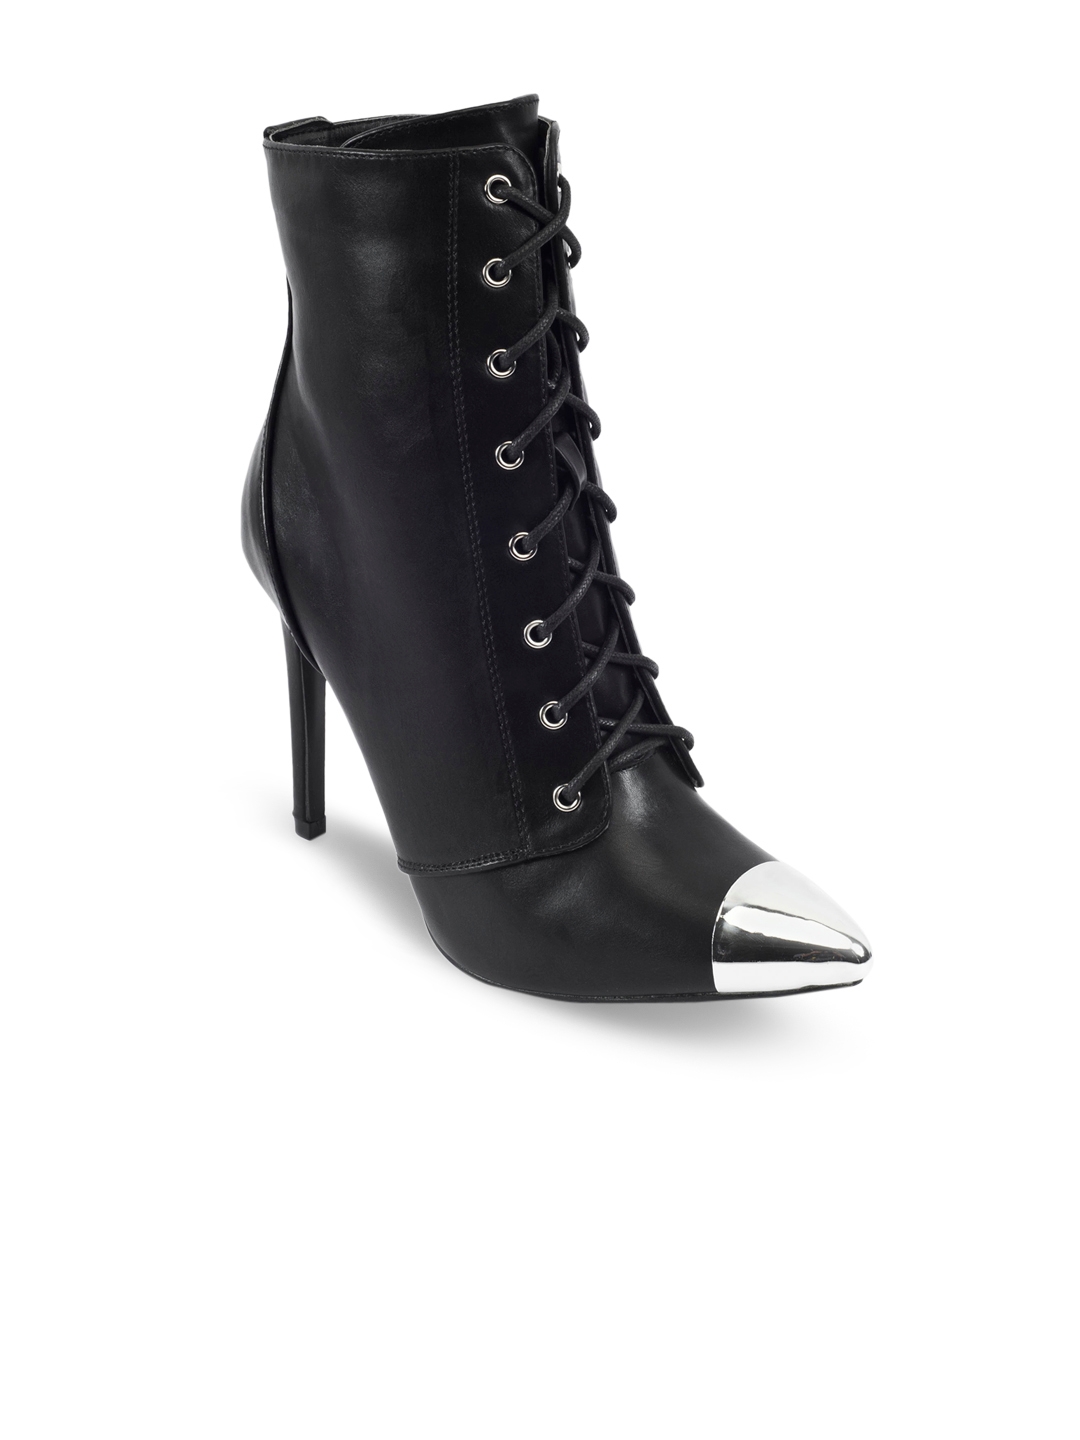 Women's Boots | Ankle & Knee High, Flat & Heeled | Carvela-hkpdtq2012.edu.vn